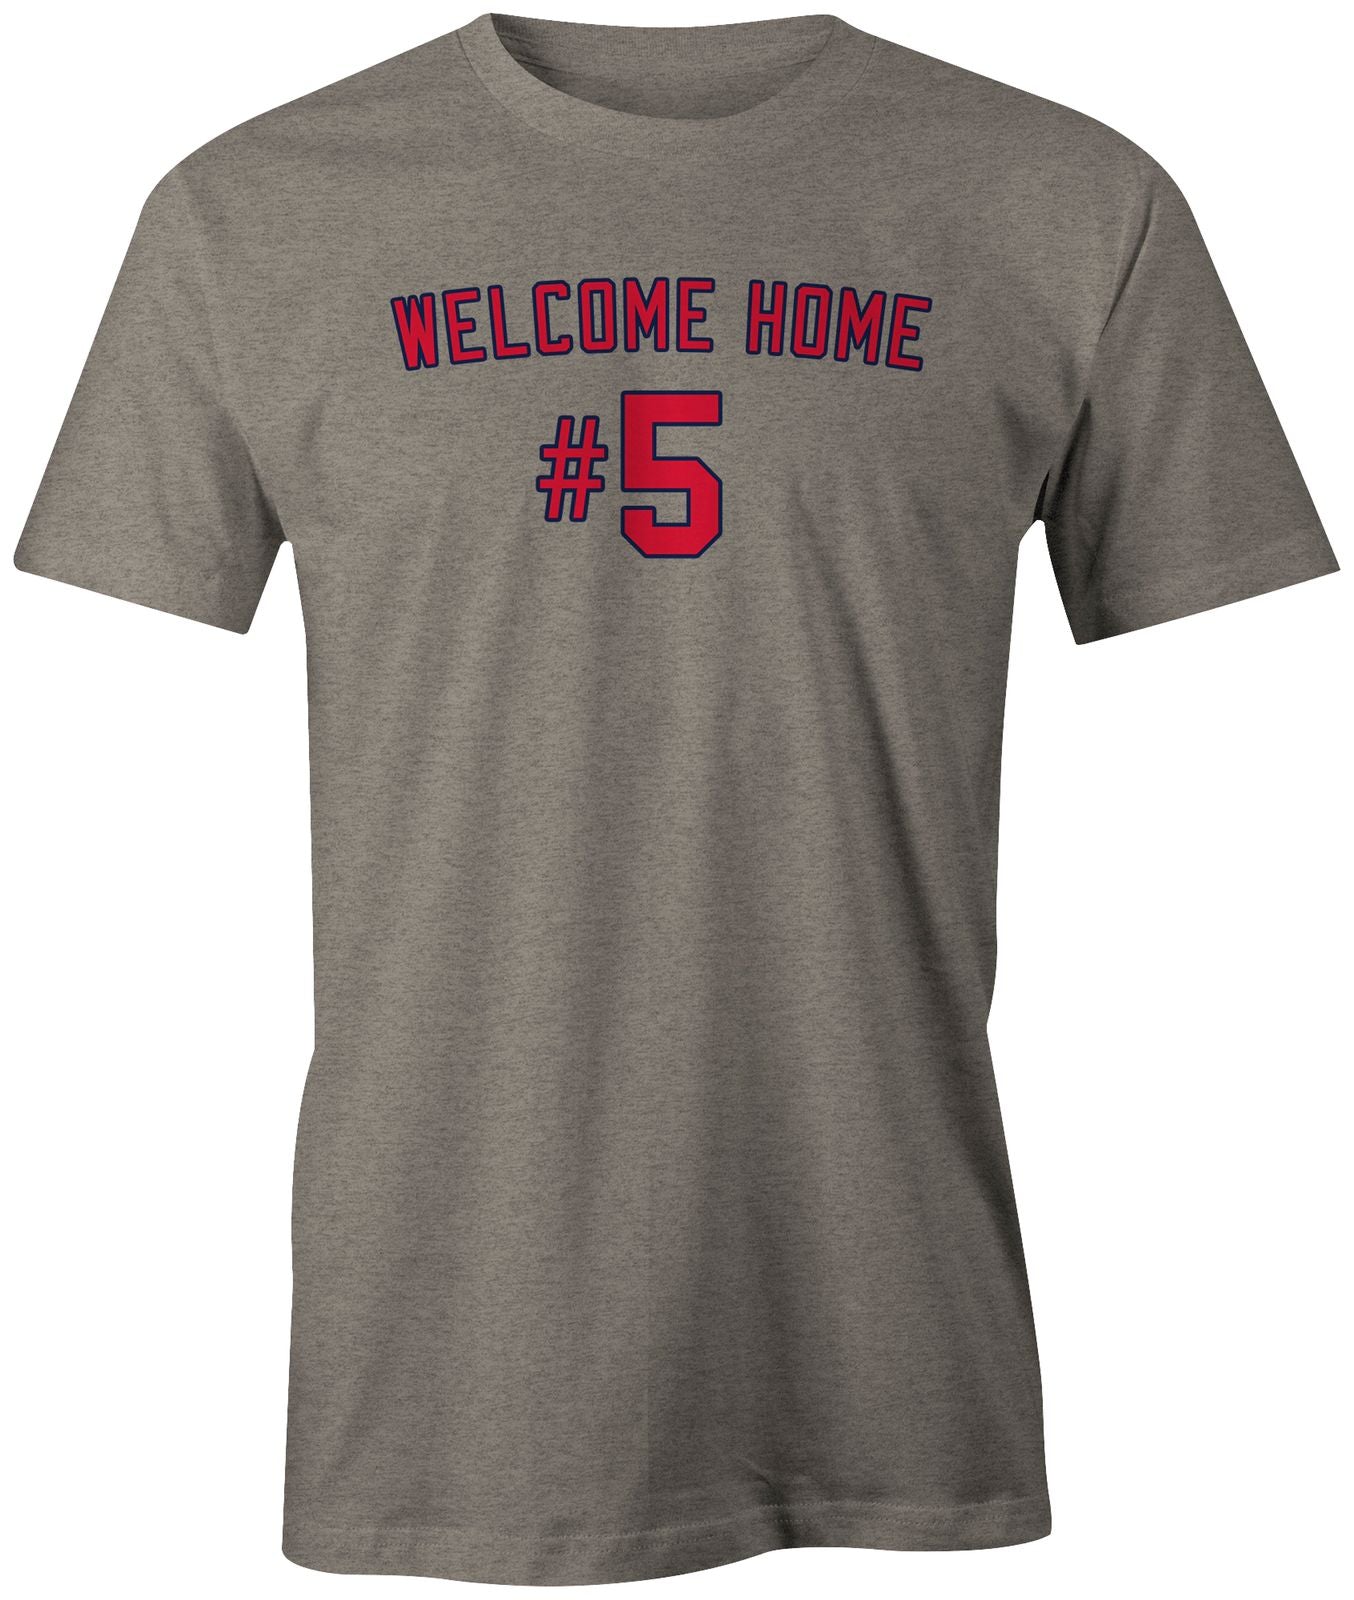 welcome home albert pujols #5 5 st louis cardinals molina wainwright baseball hot stove busch stadium